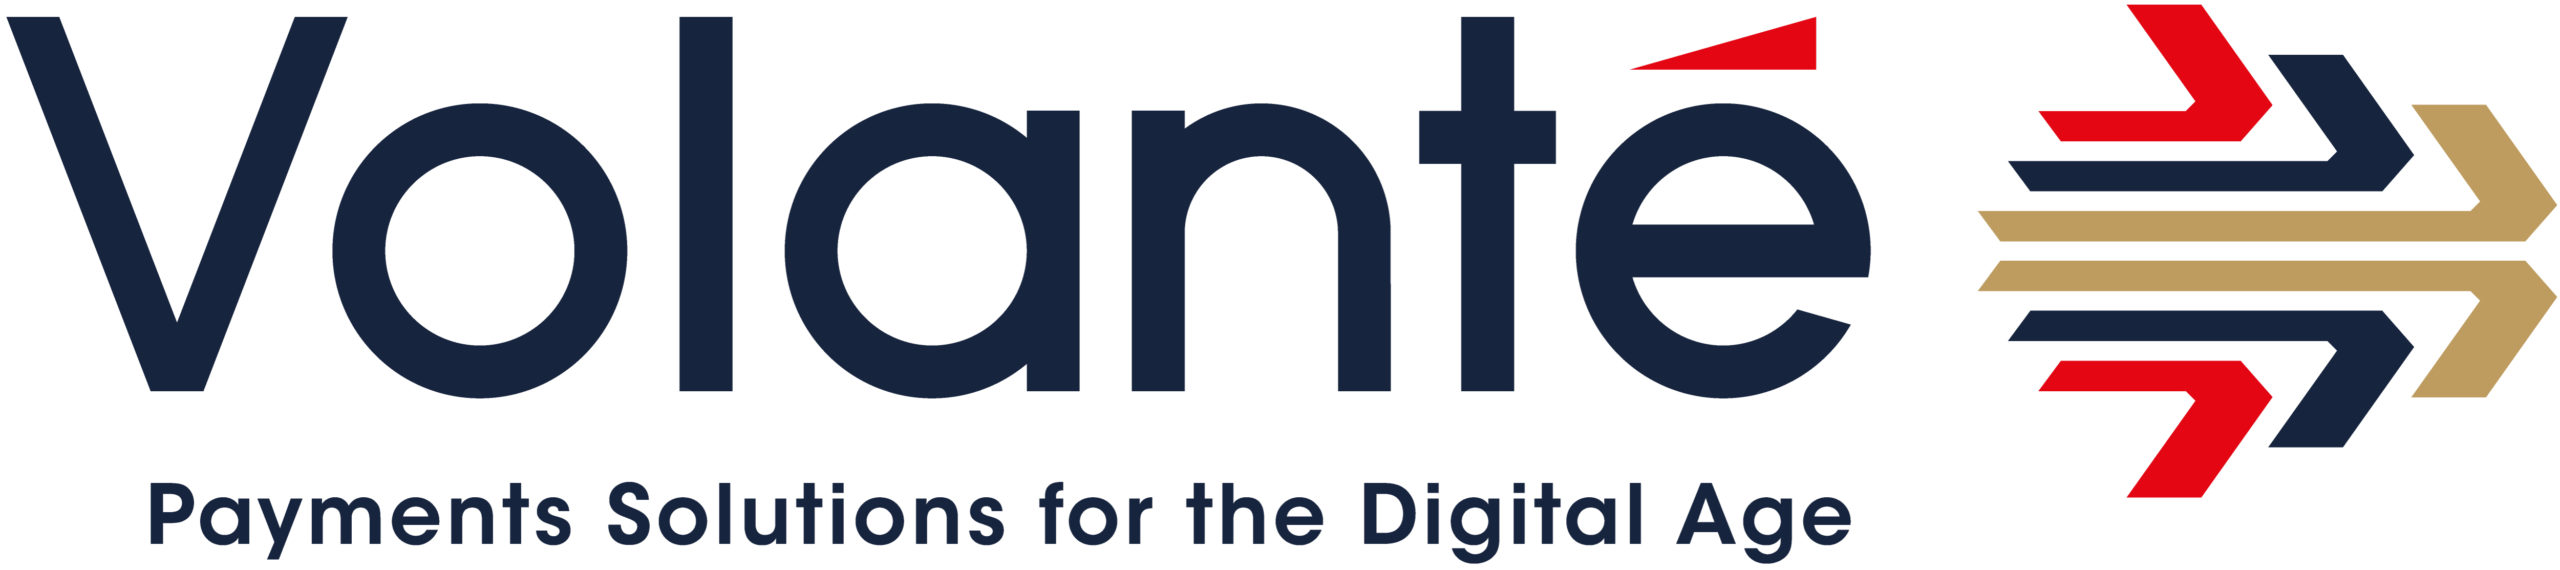 Volante payments logo